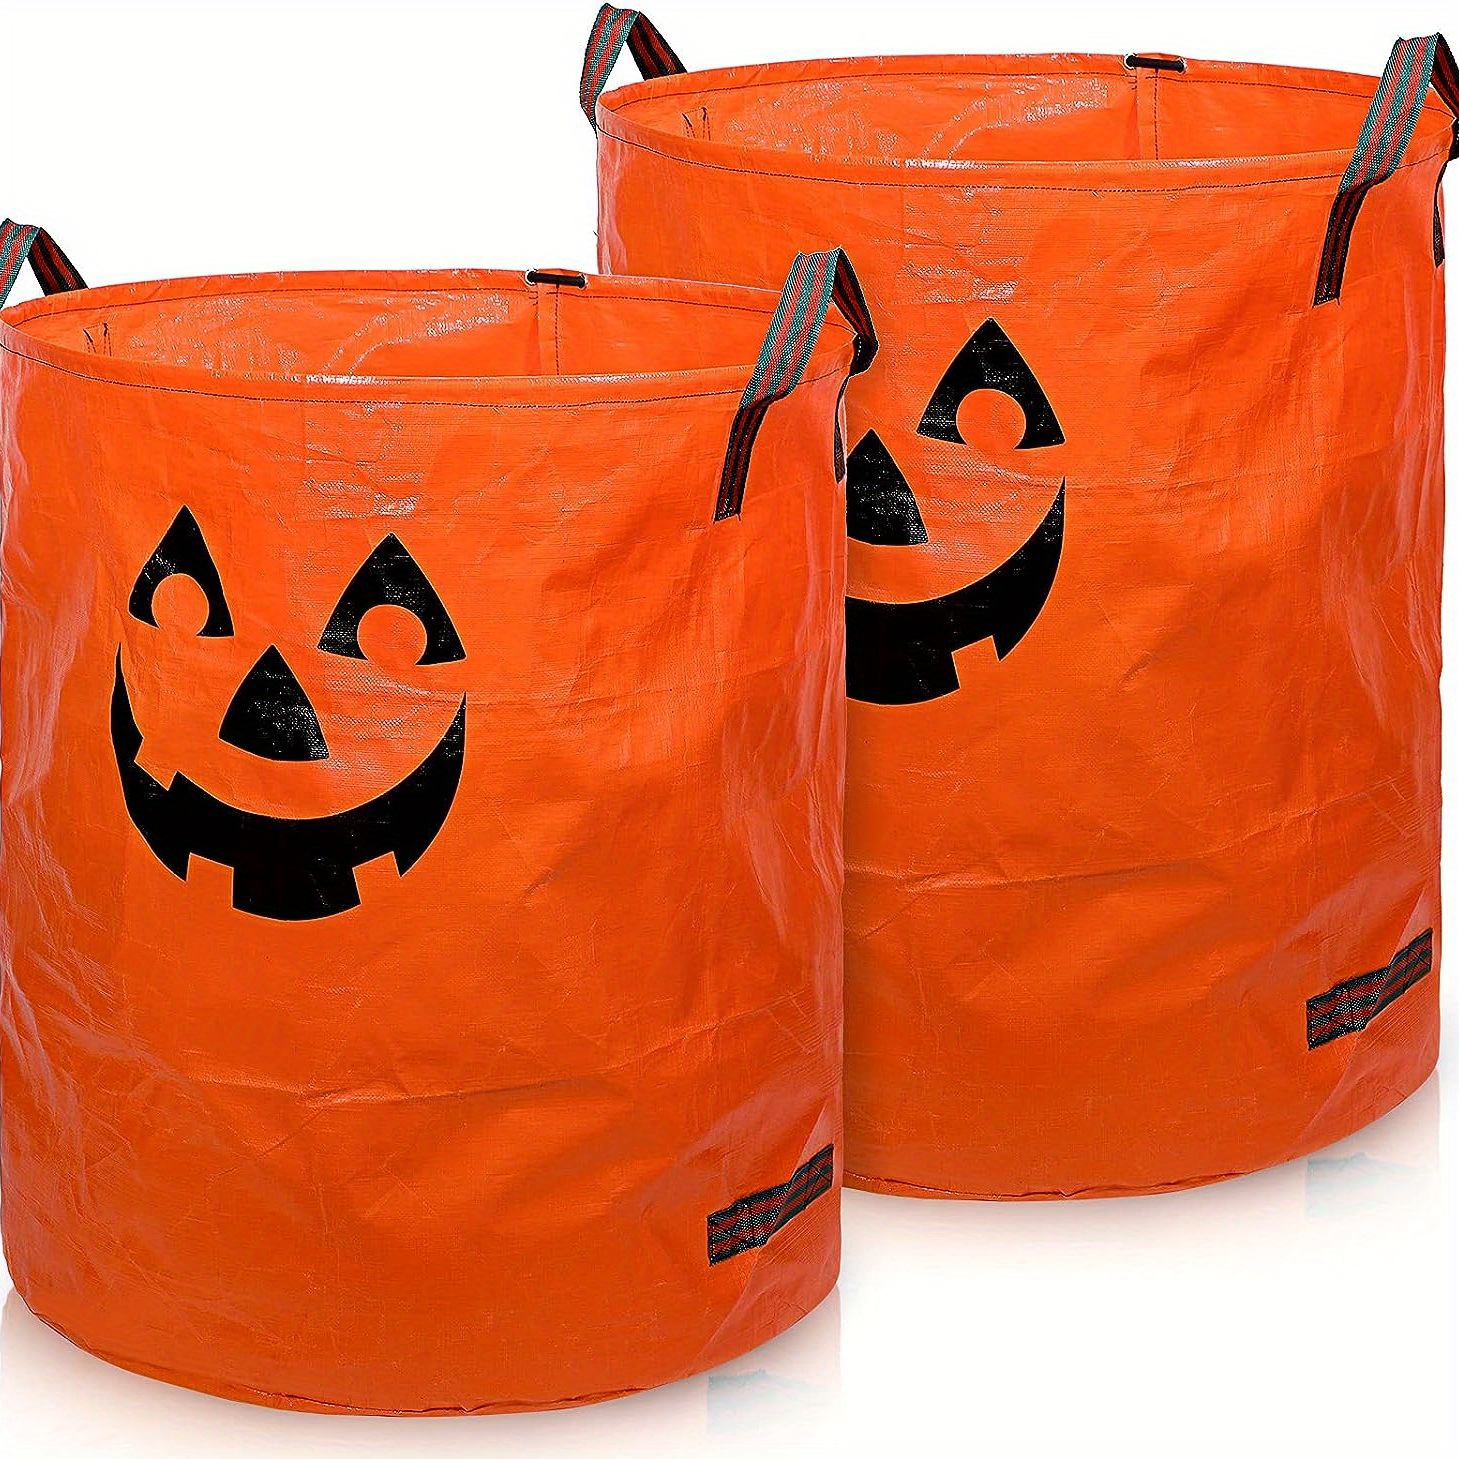 N/C 8PCS Pumpkin Leaf Bags Halloween Leaf Bags Pumpkin Trash Bags